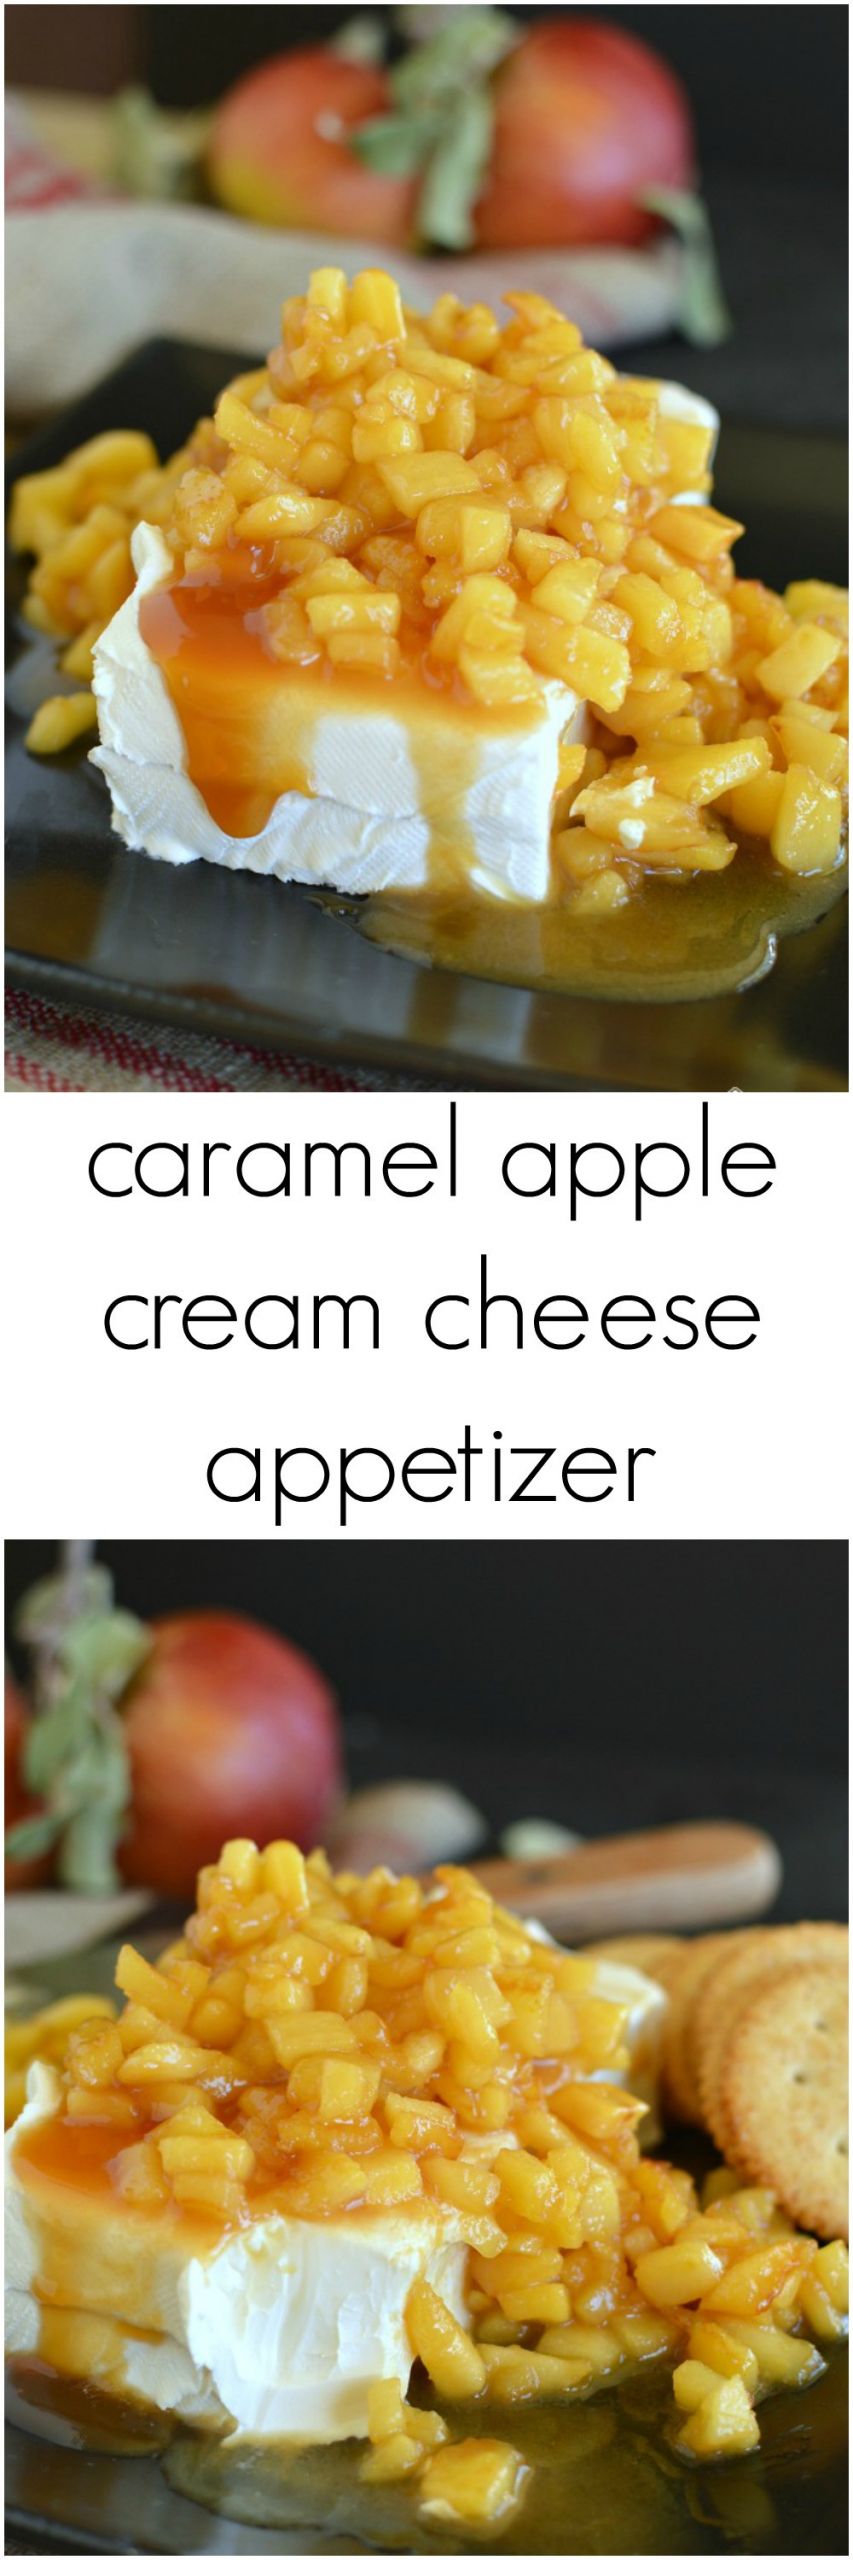 Apple Appetizer Recipes
 Caramel Apple Cream Cheese Appetizer